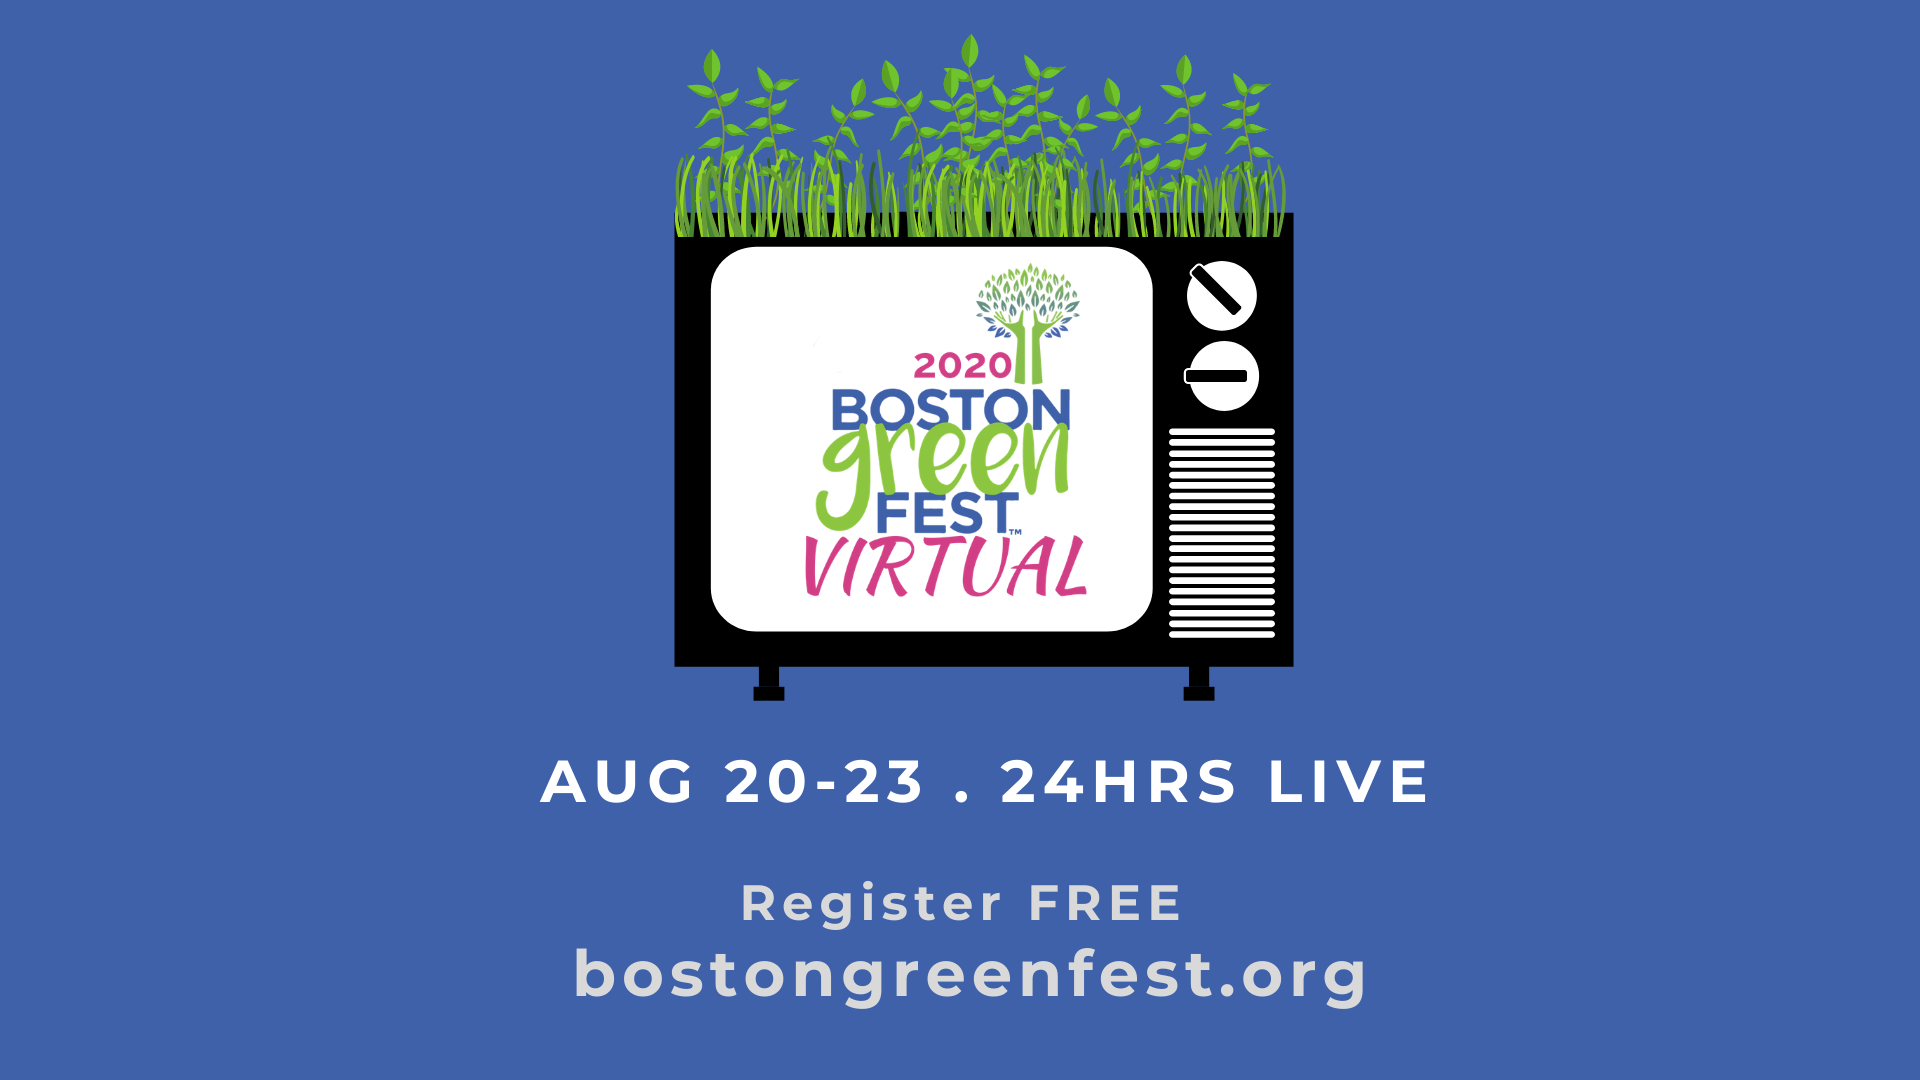 Boston GreenFest Virtual